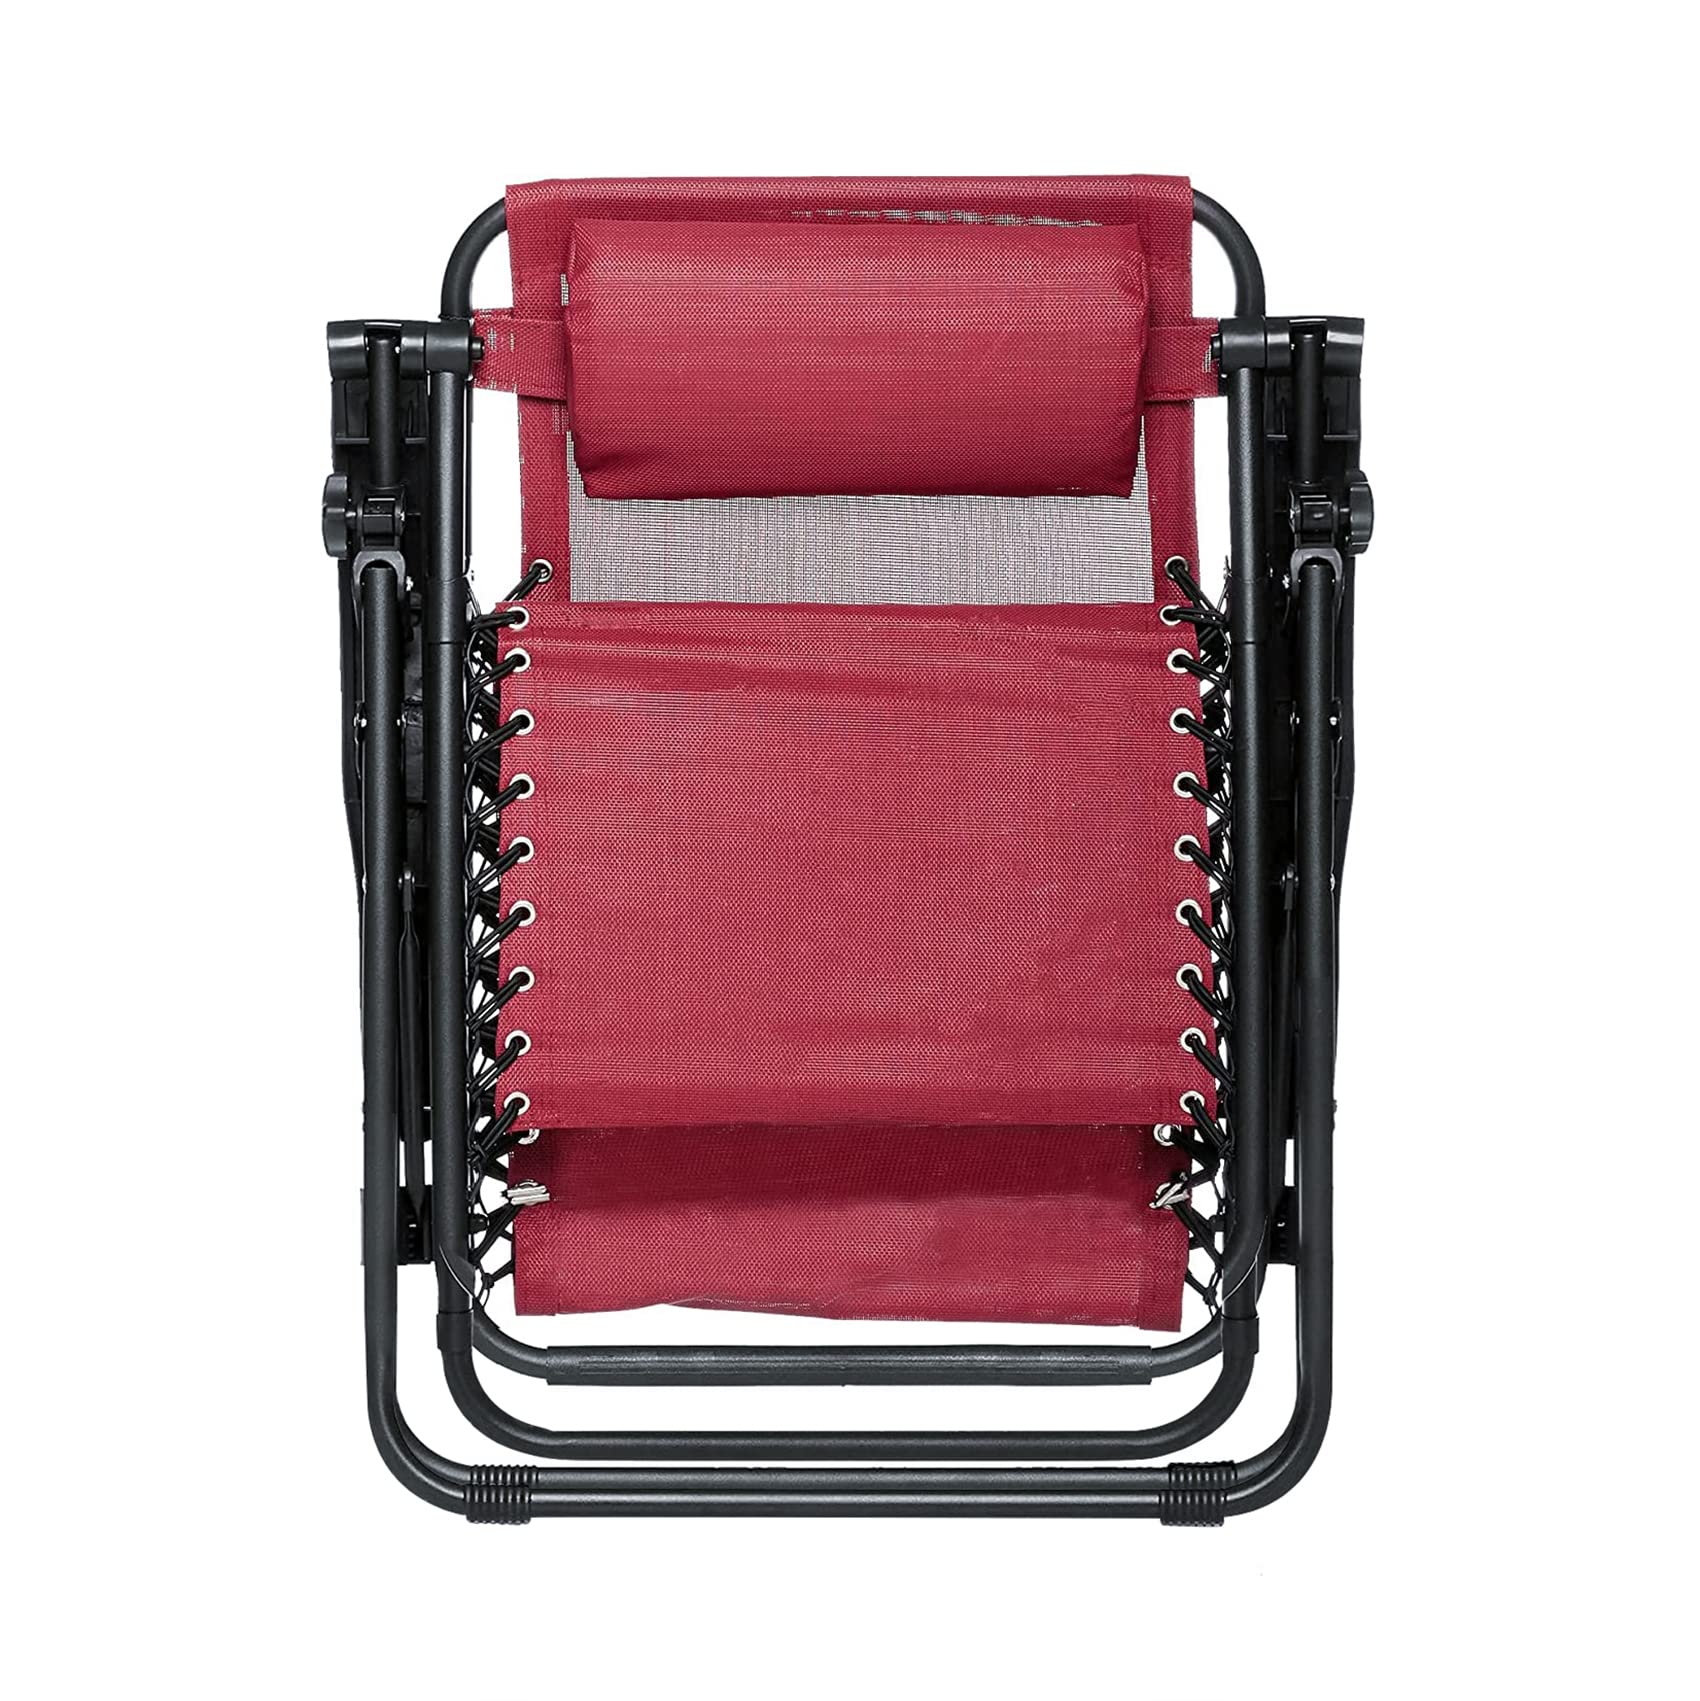 Amazon Basics Outdoor Textilene Adjustable Zero Gravity Folding Reclining Lounge Chair with Pillow, 26", Burgundy